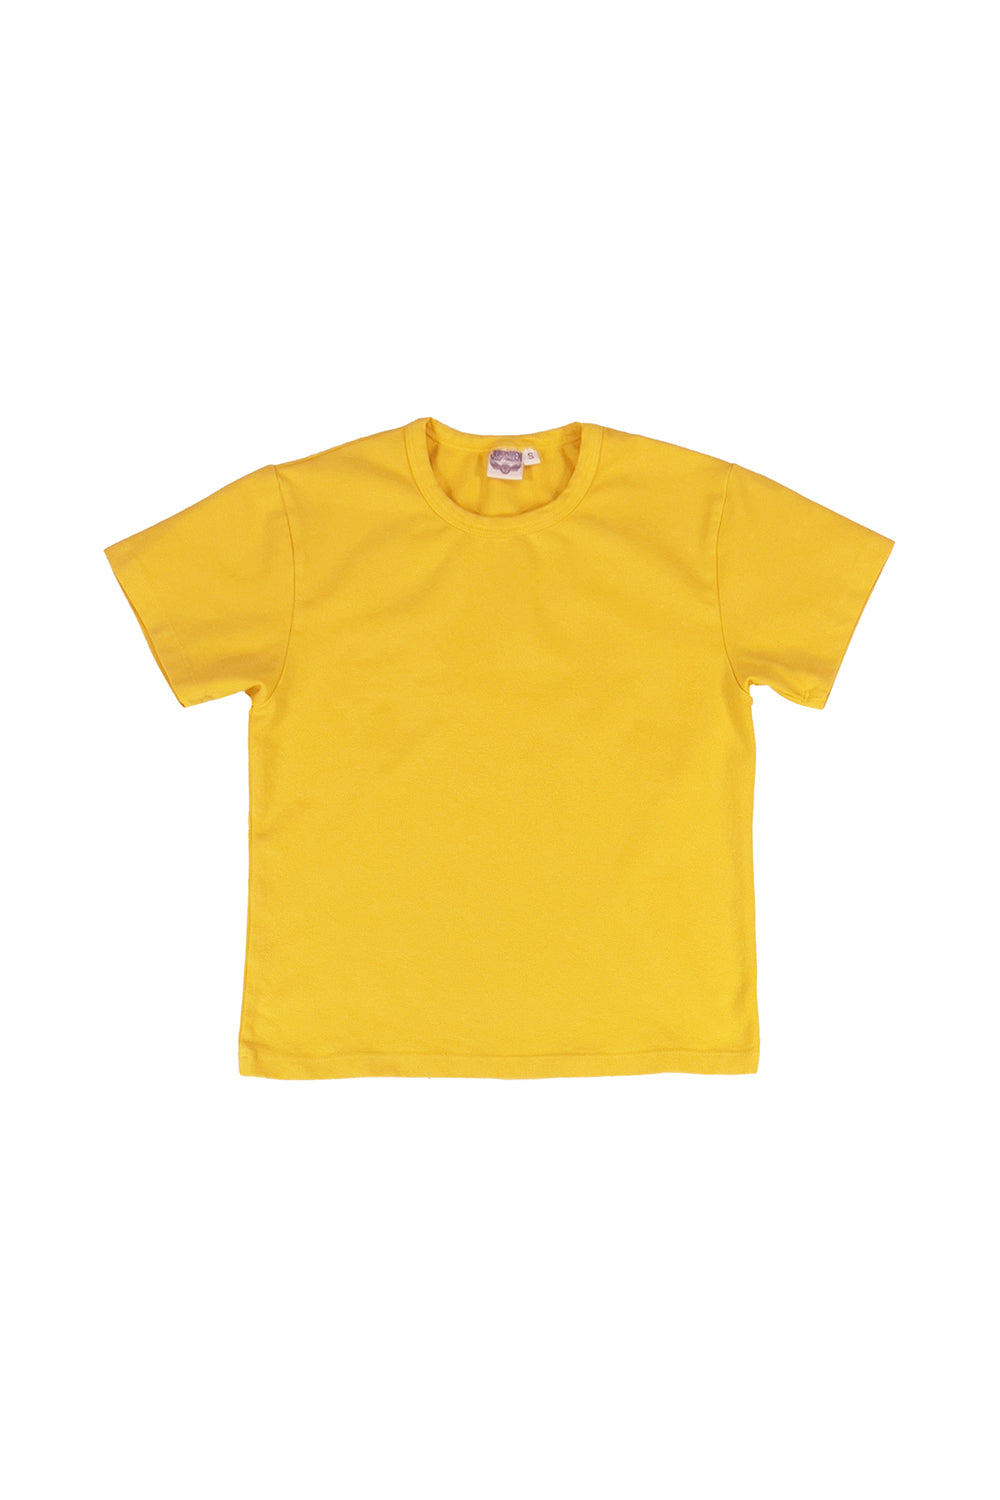 Tiny Tee | Jungmaven Hemp Clothing & Accessories / Color: Sunshine Yellow